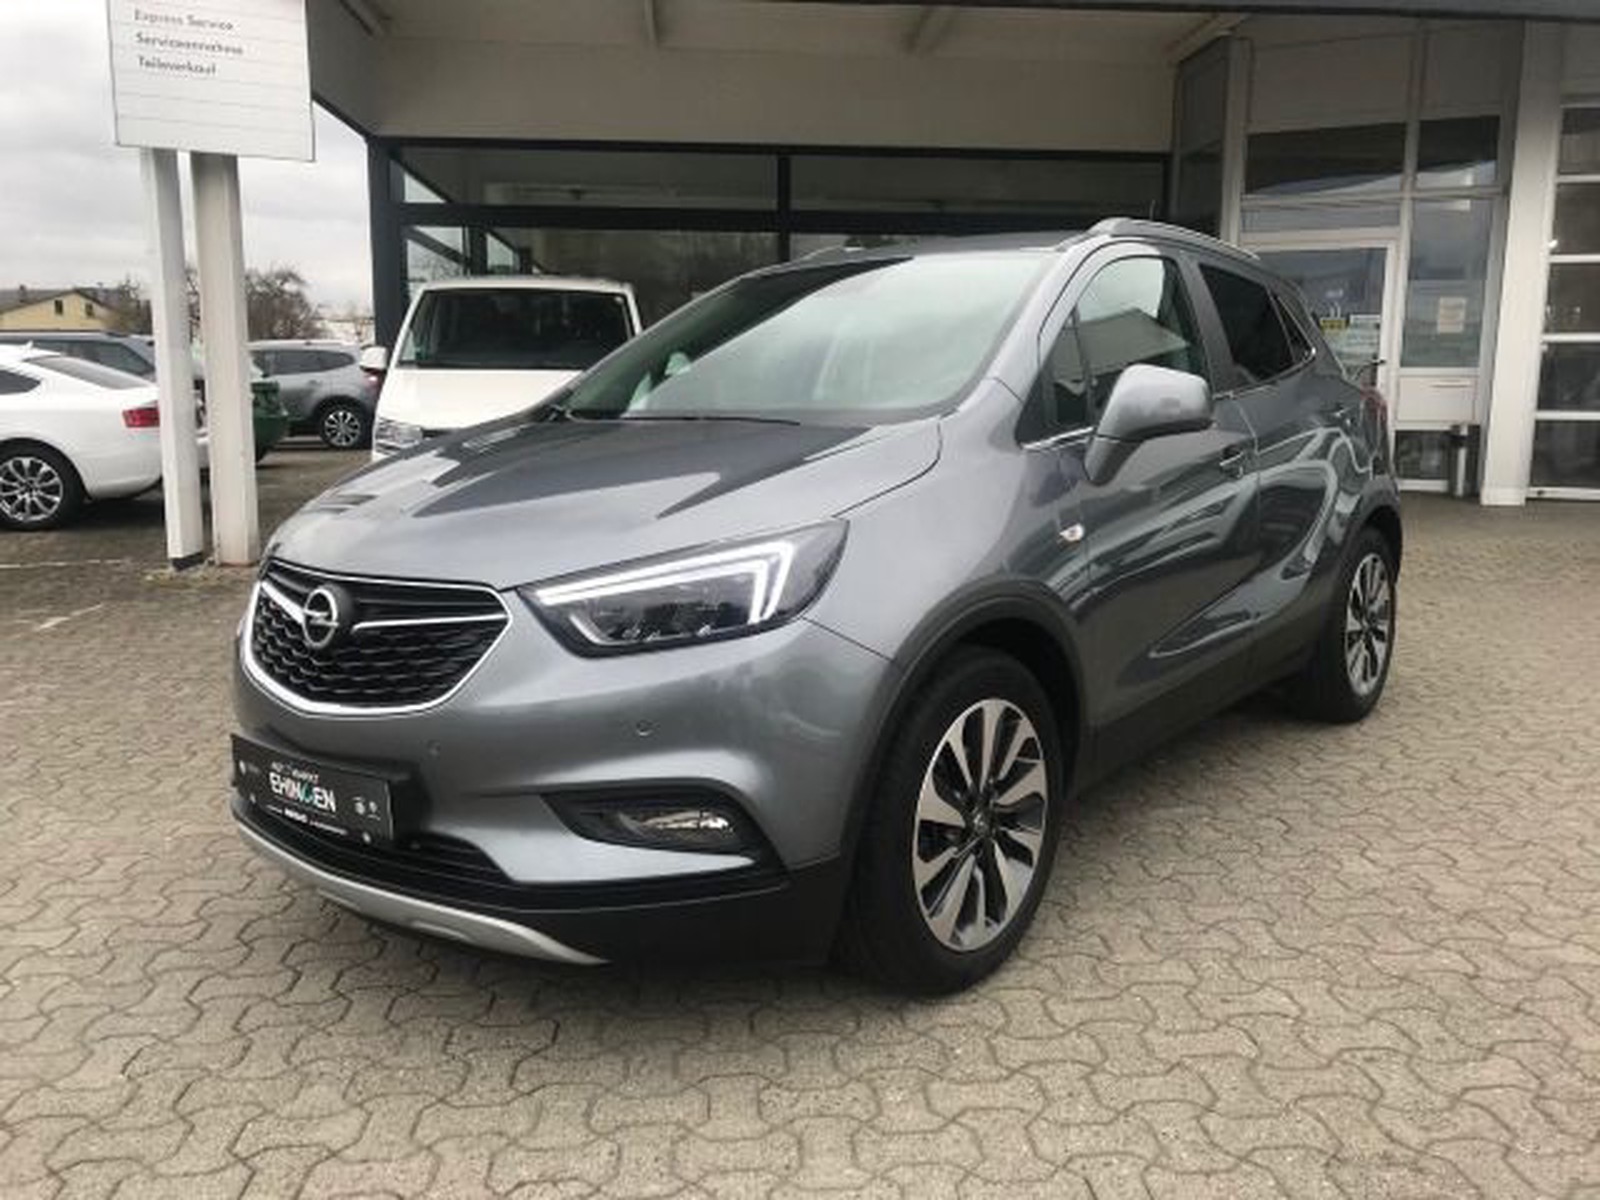 Opel Mokka X 1.4 Turbo Innovation, Alu, Navi, AHK, LED,  gebraucht  kaufen in Munderkingen Preis 14490 eur - Int.Nr.: 6454 VERKAUFT